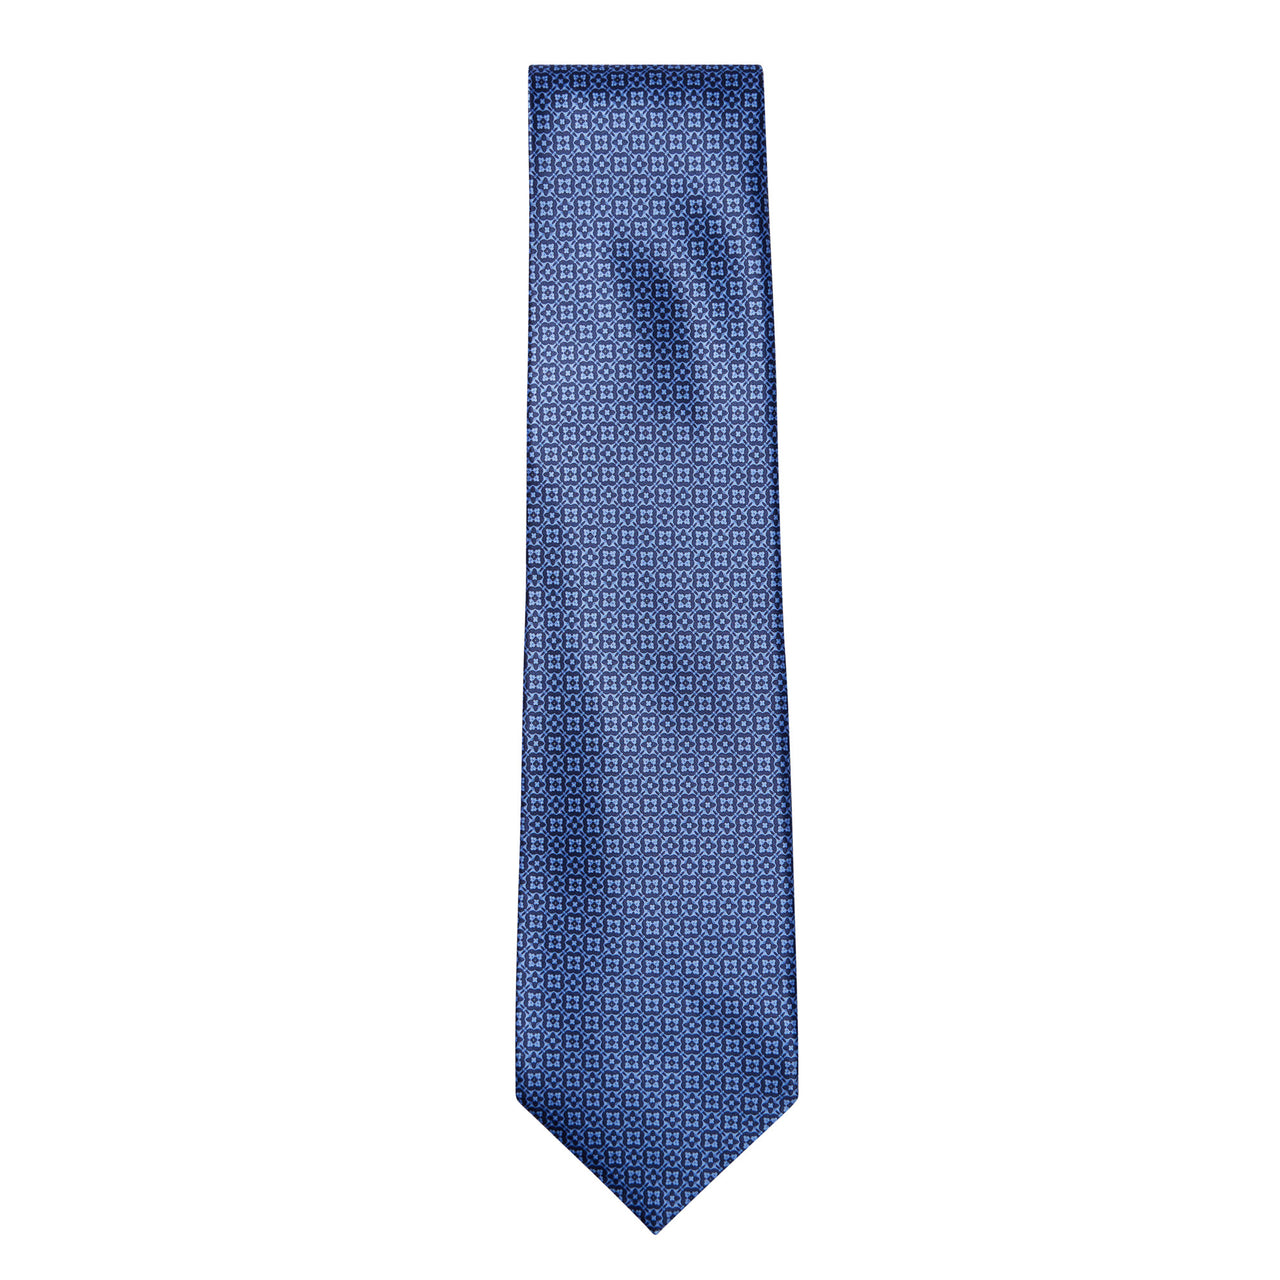 STEFANO RICCI 100% Silk Tie BLUE/NAVY